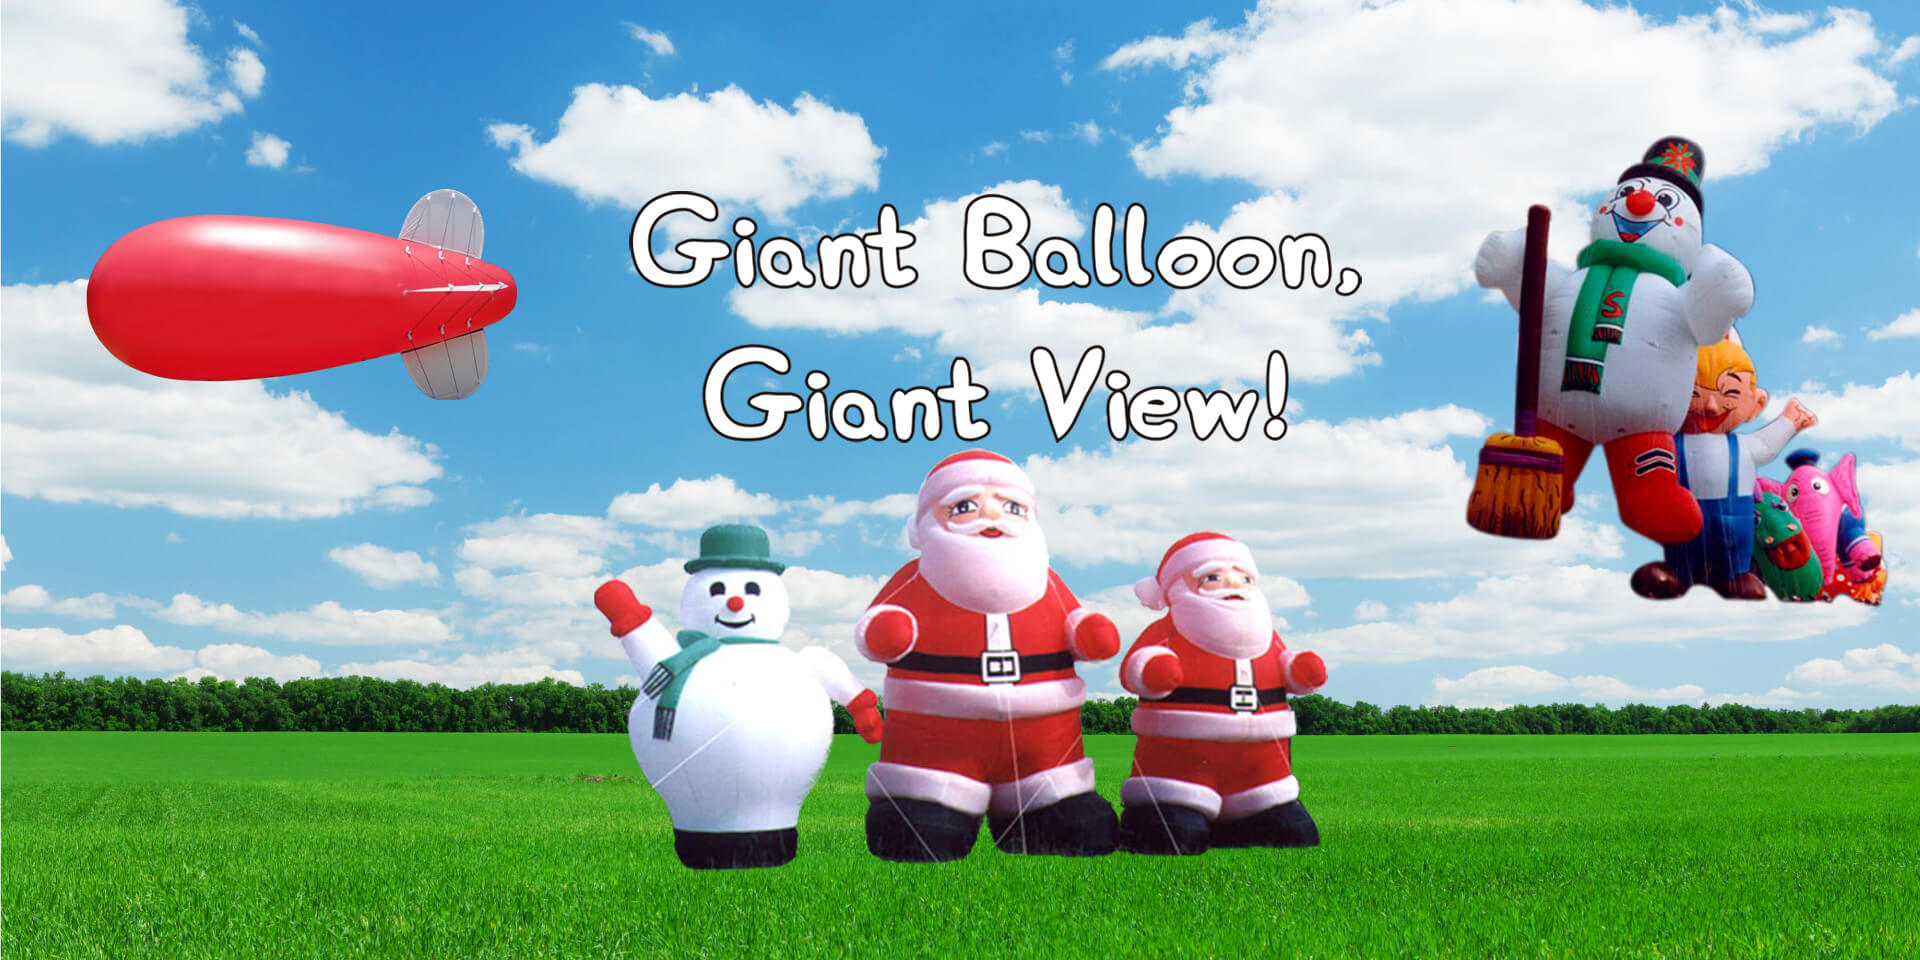 blimp-snowman-Santa-balloon